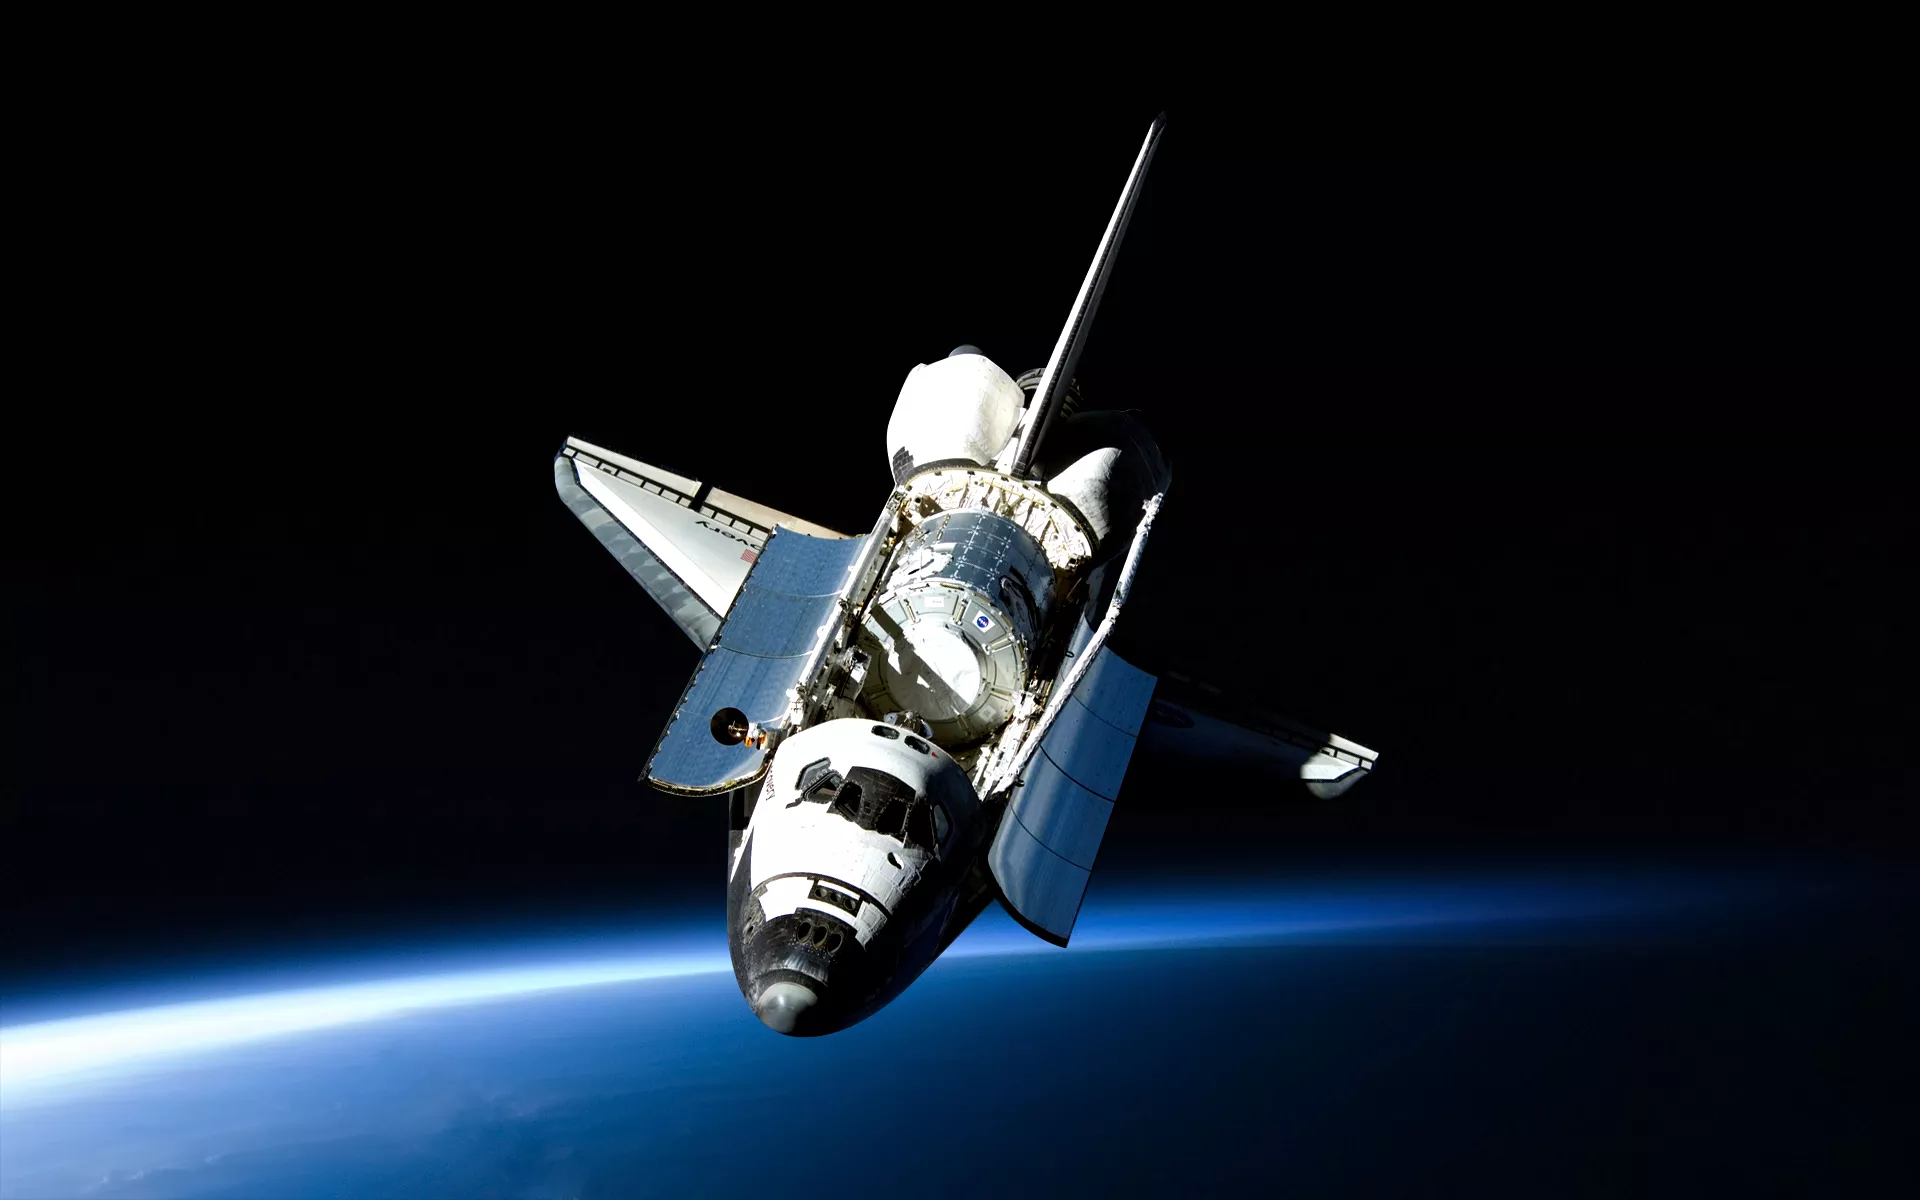 space shuttle high resolution wallpaper images best desktop background